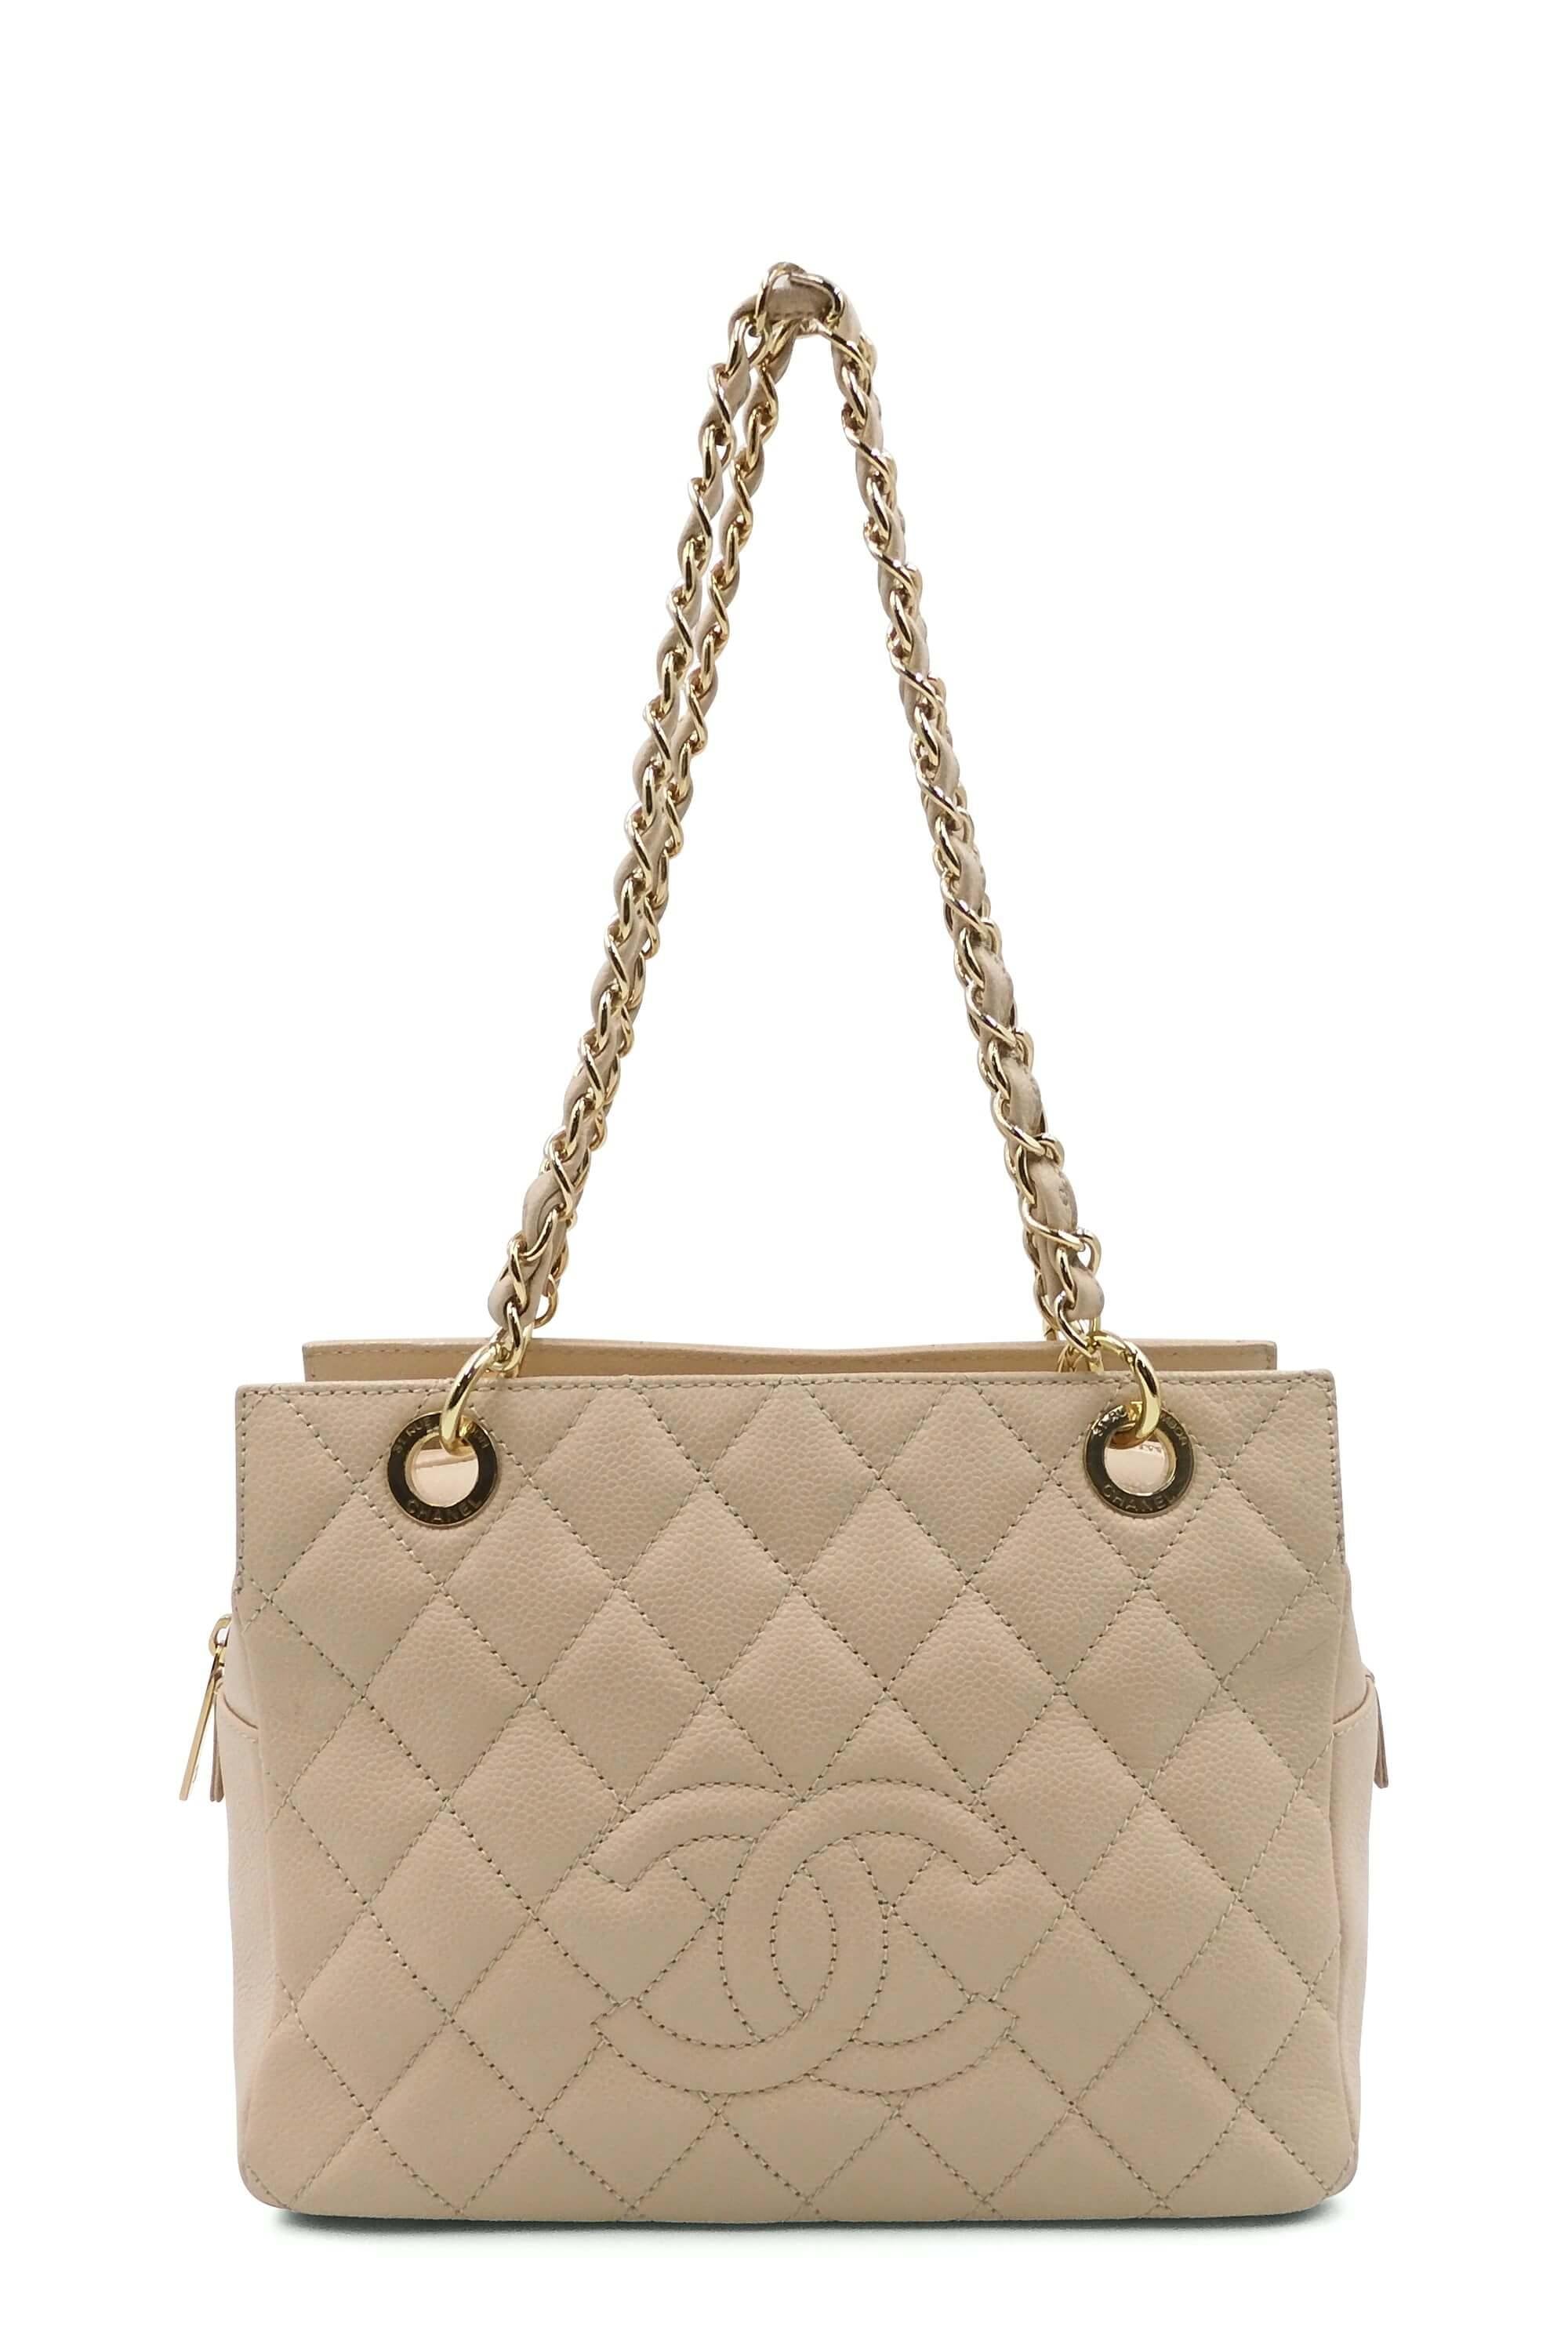 Chanel Timeless Handbag 358174